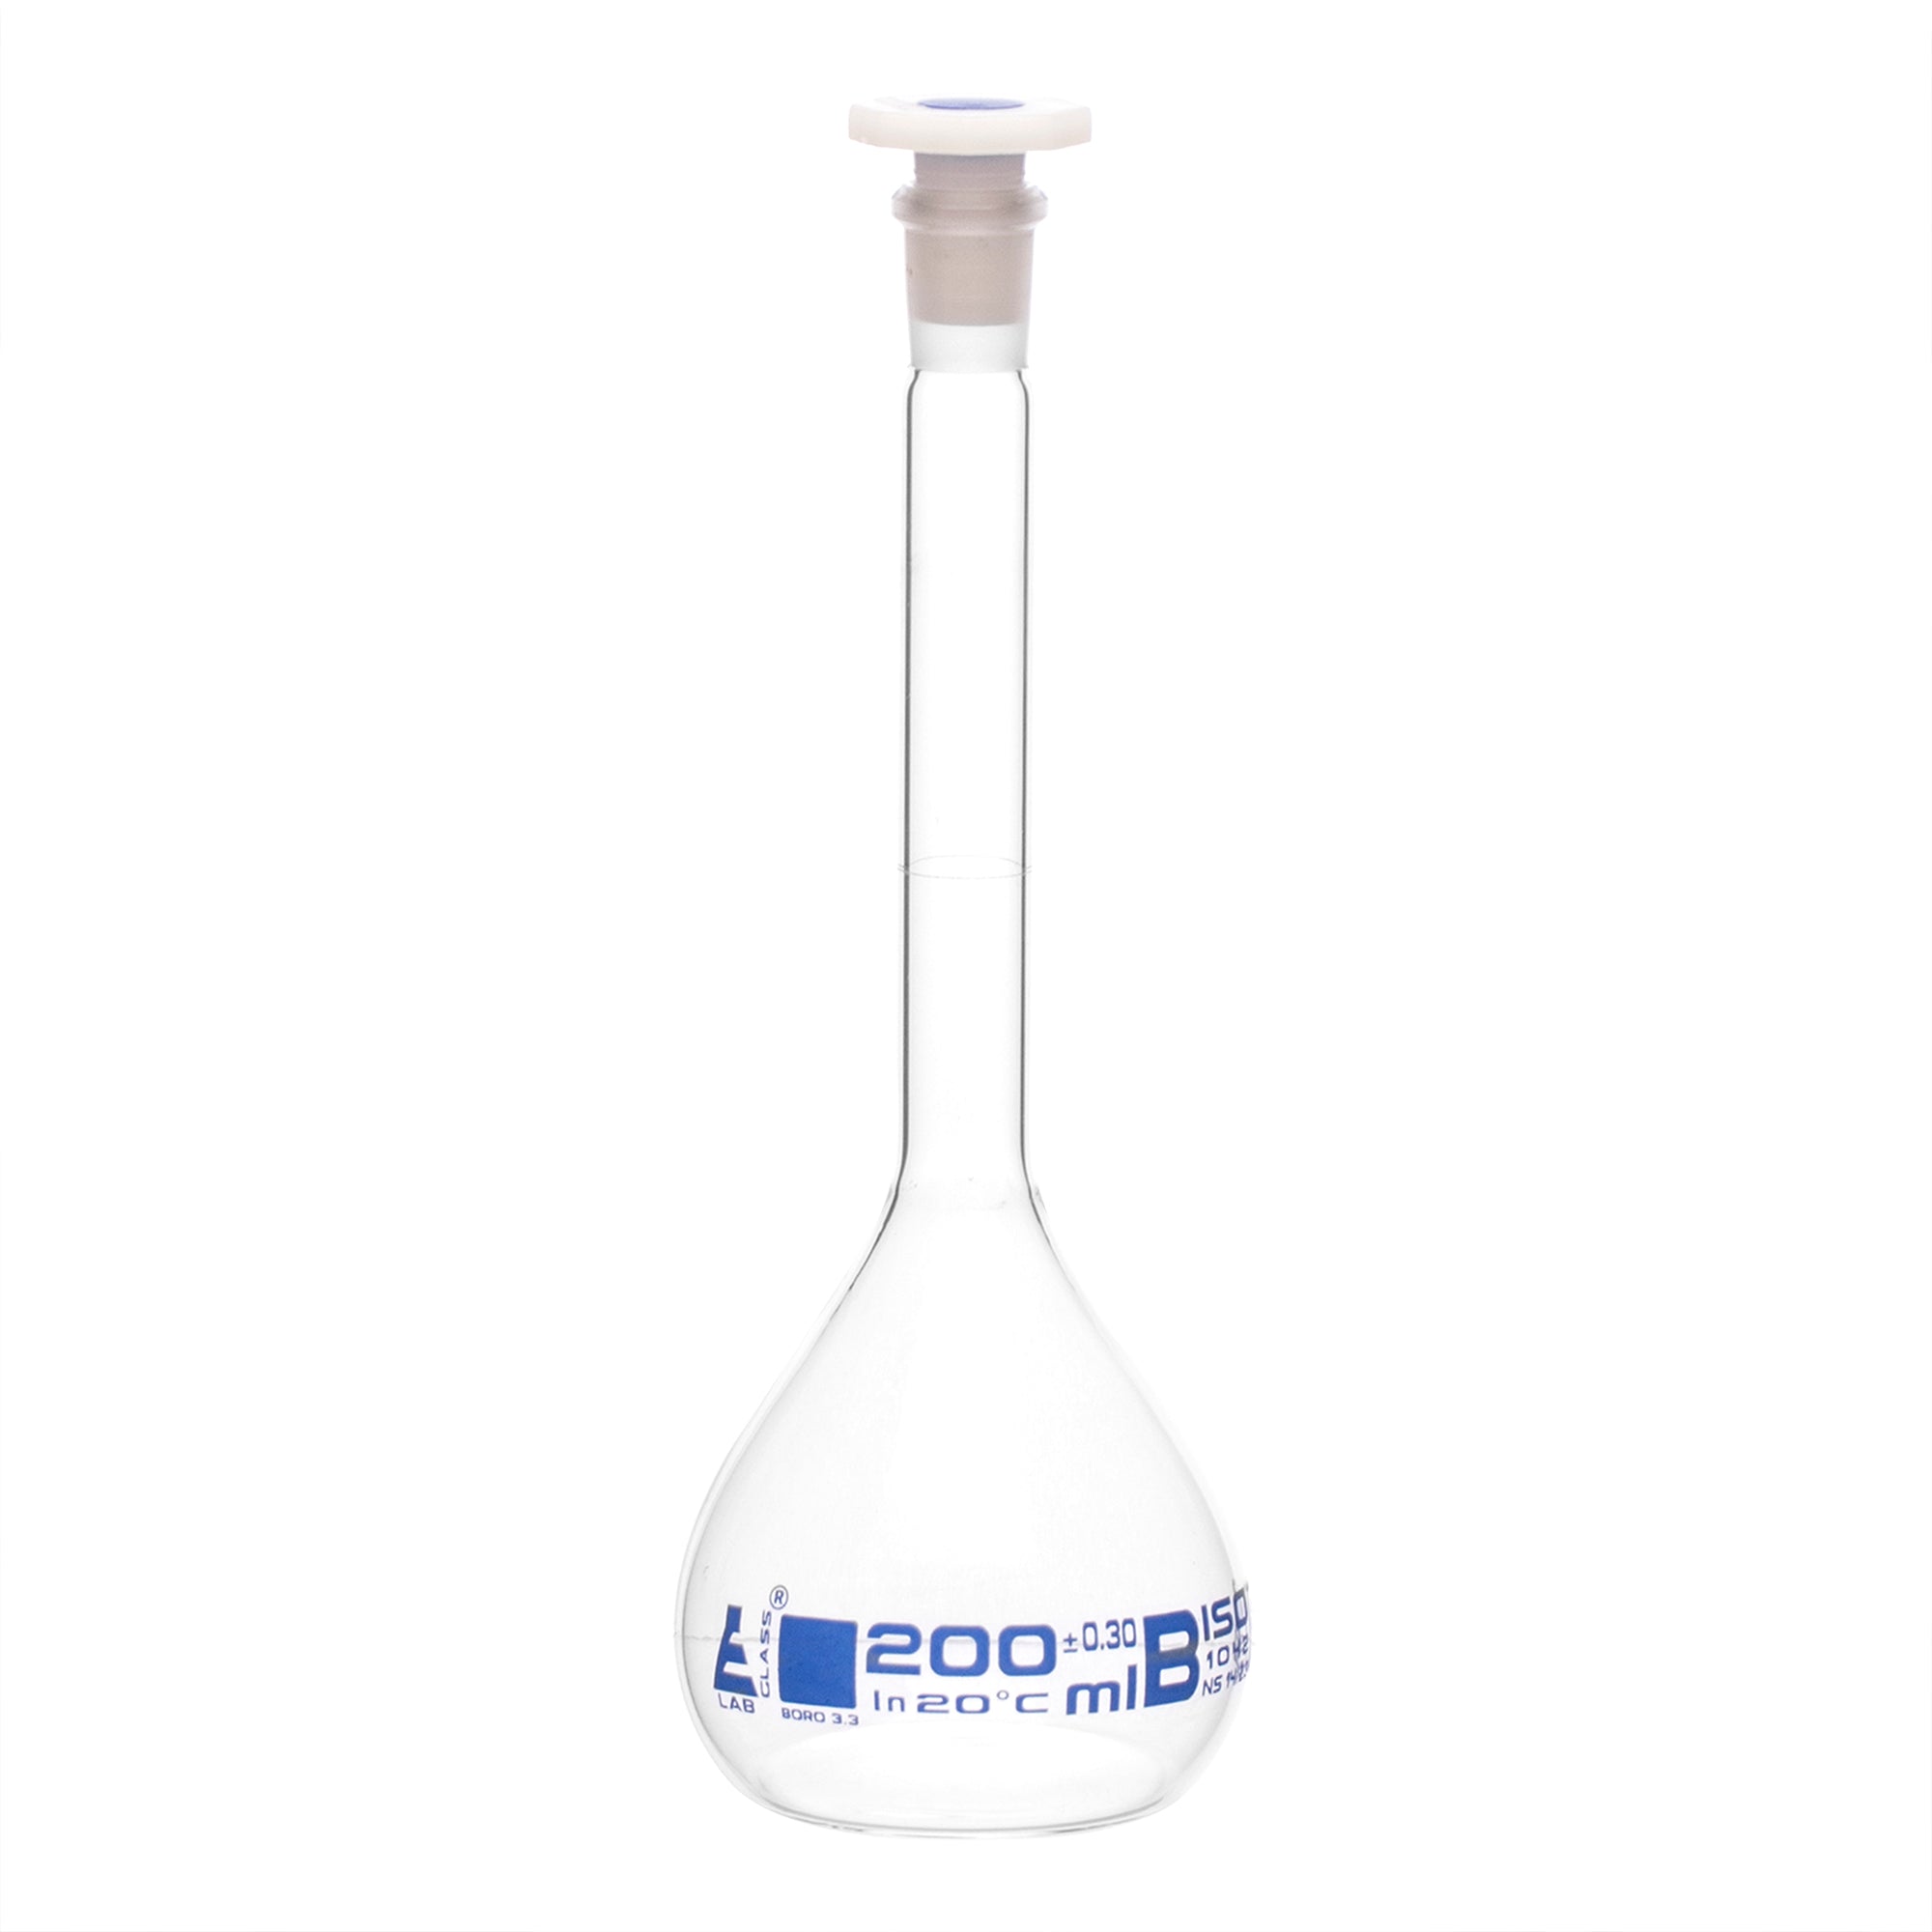 Borosilicate Glass Volumetric Flask with Polyethylene Stopper, 200ml, Class B, Blue Print, Autoclavable